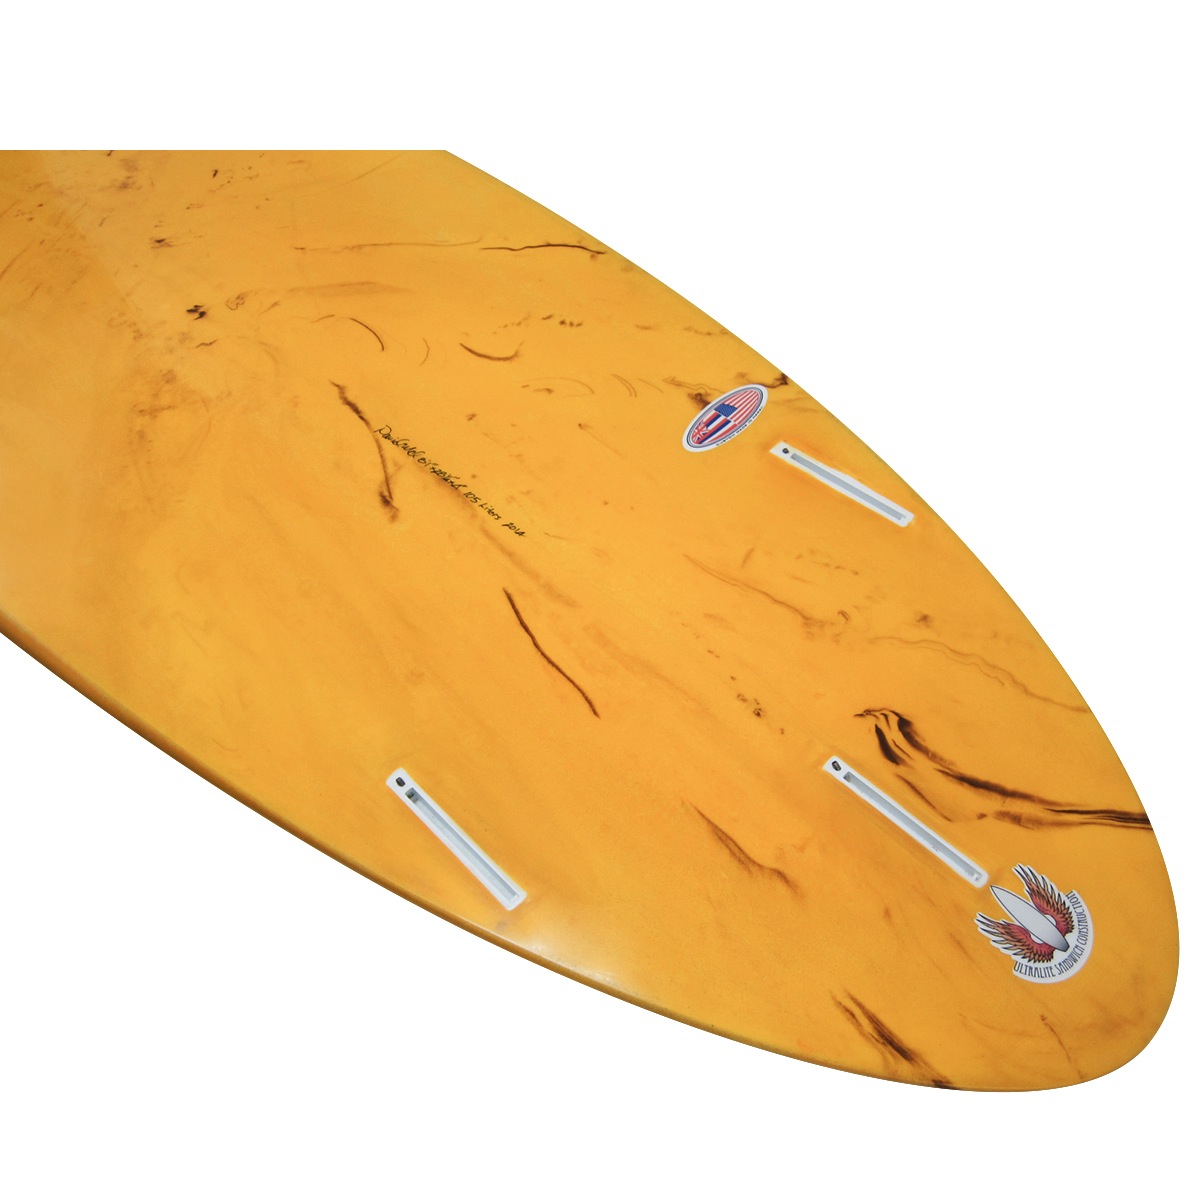 MEL SURFBOARDS / HP CUSTOM SUP 8`1